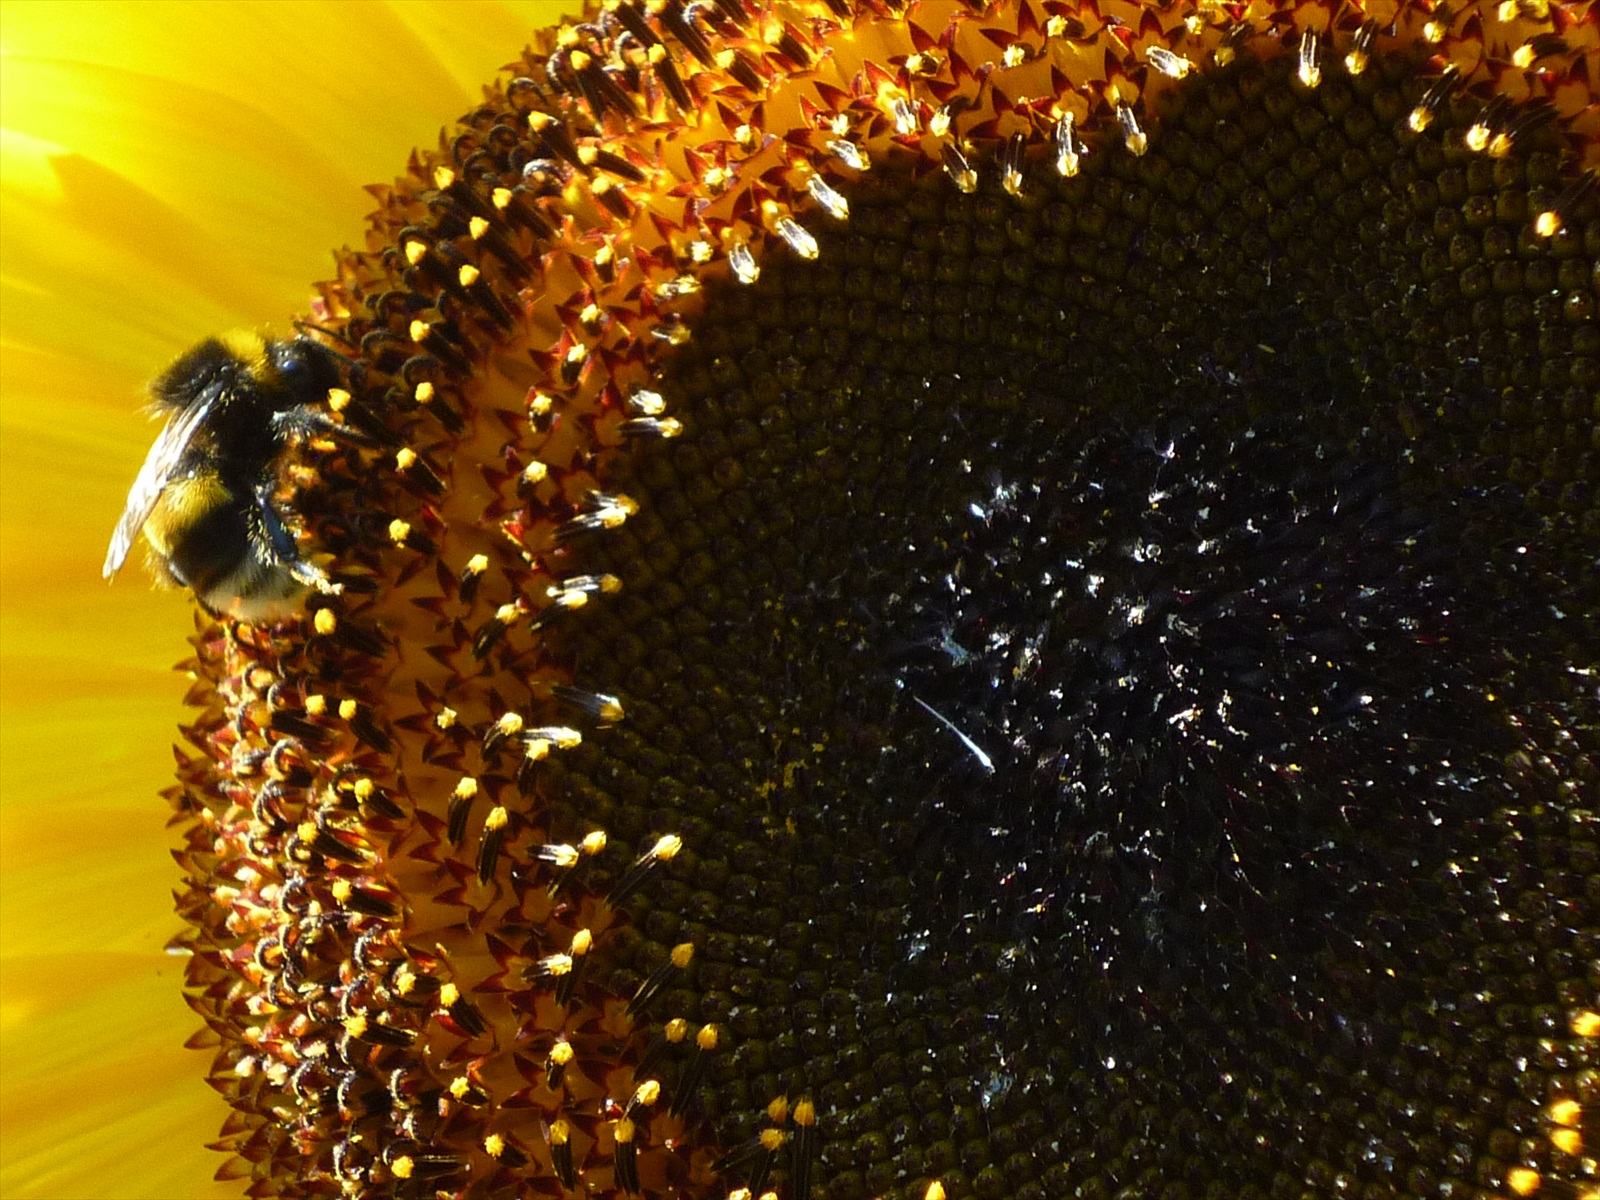 včielka , zber peľu